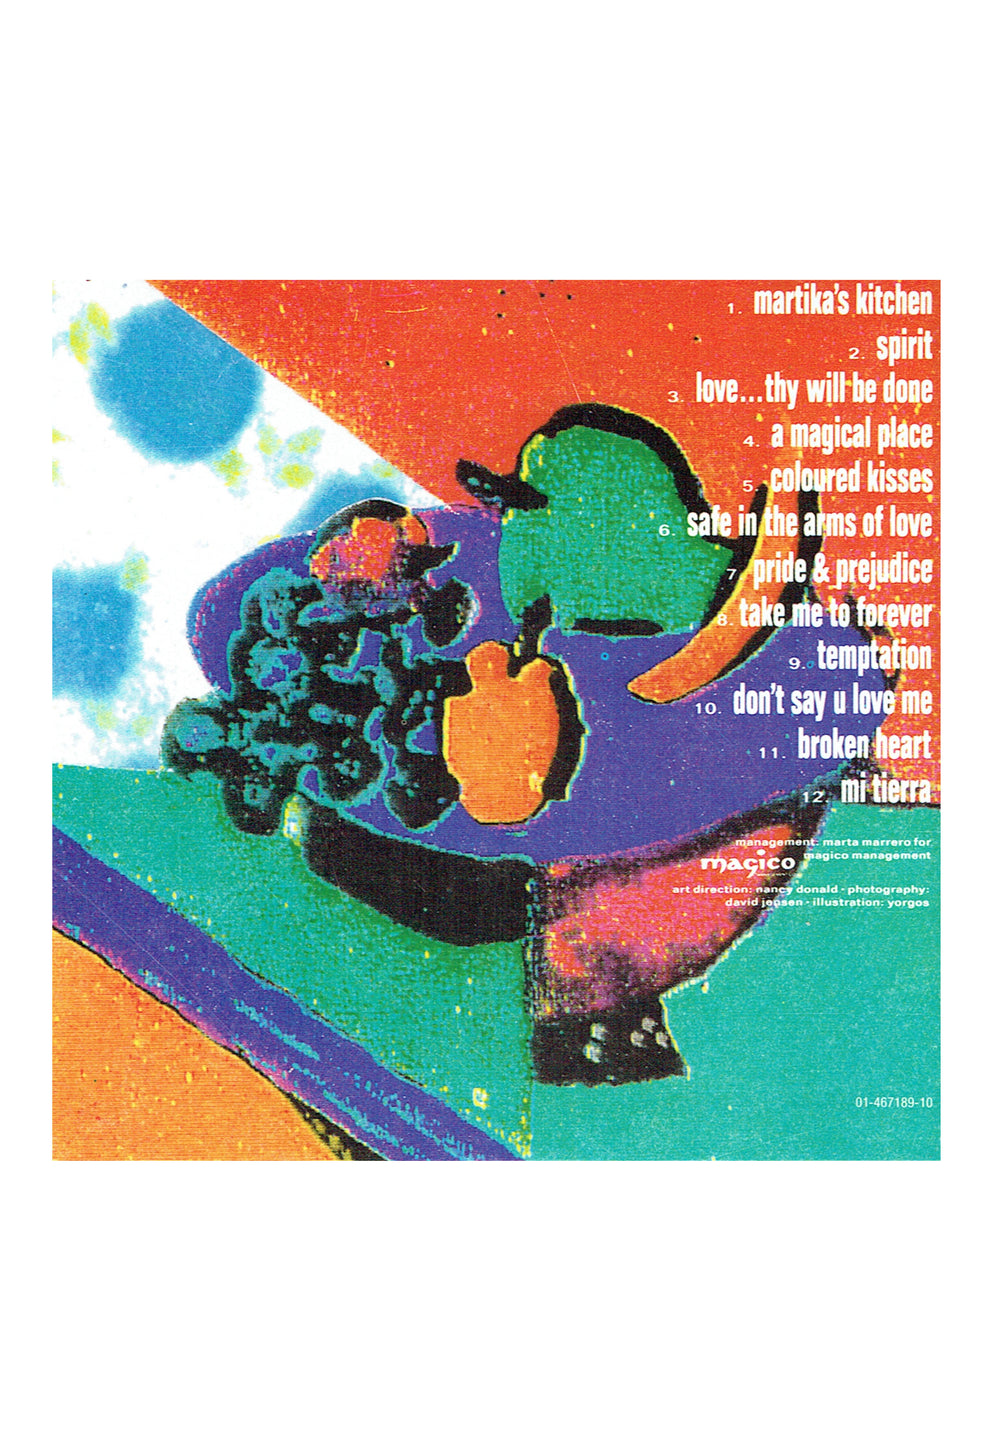 Prince – Martika Martika's Kitchen  CD Album UK 4 Tracks By Prince Preloved: 1991